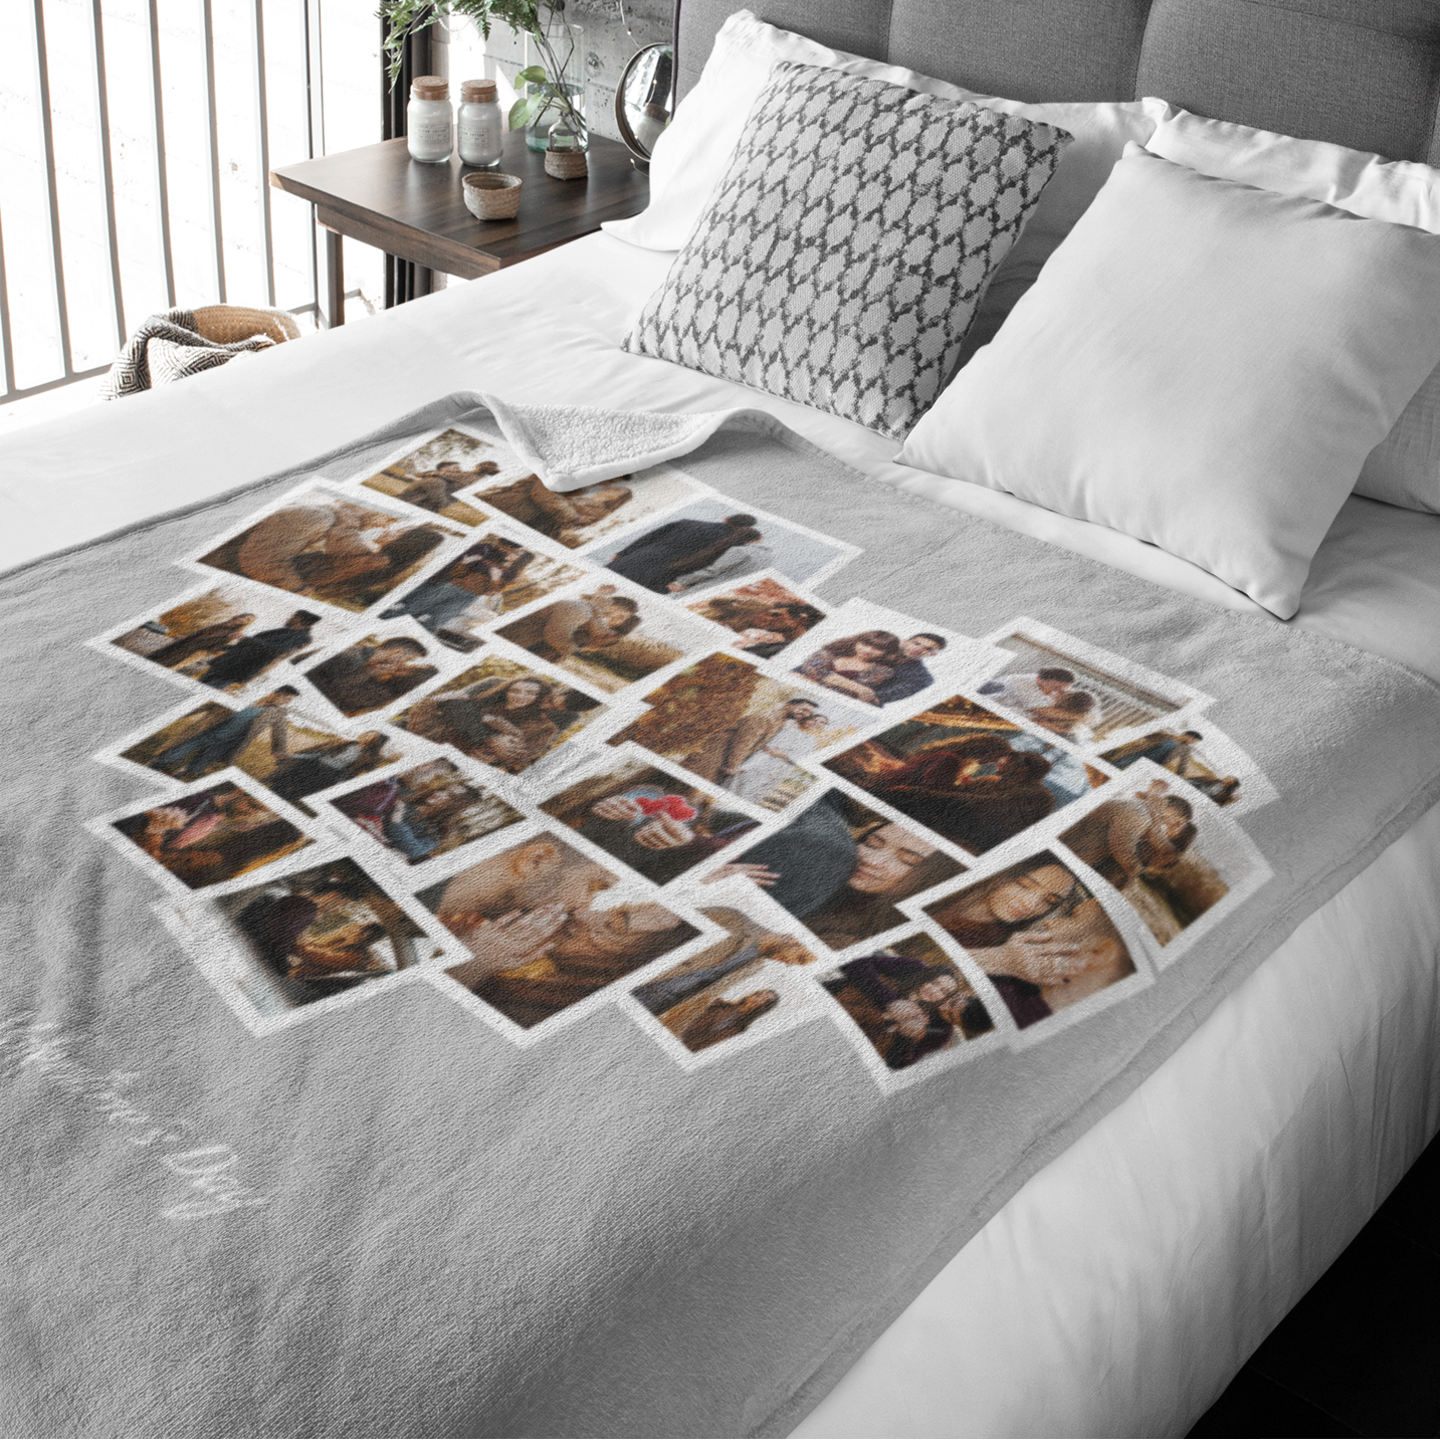 Heart Shaped Collage Premium Fleece Photo Blanket